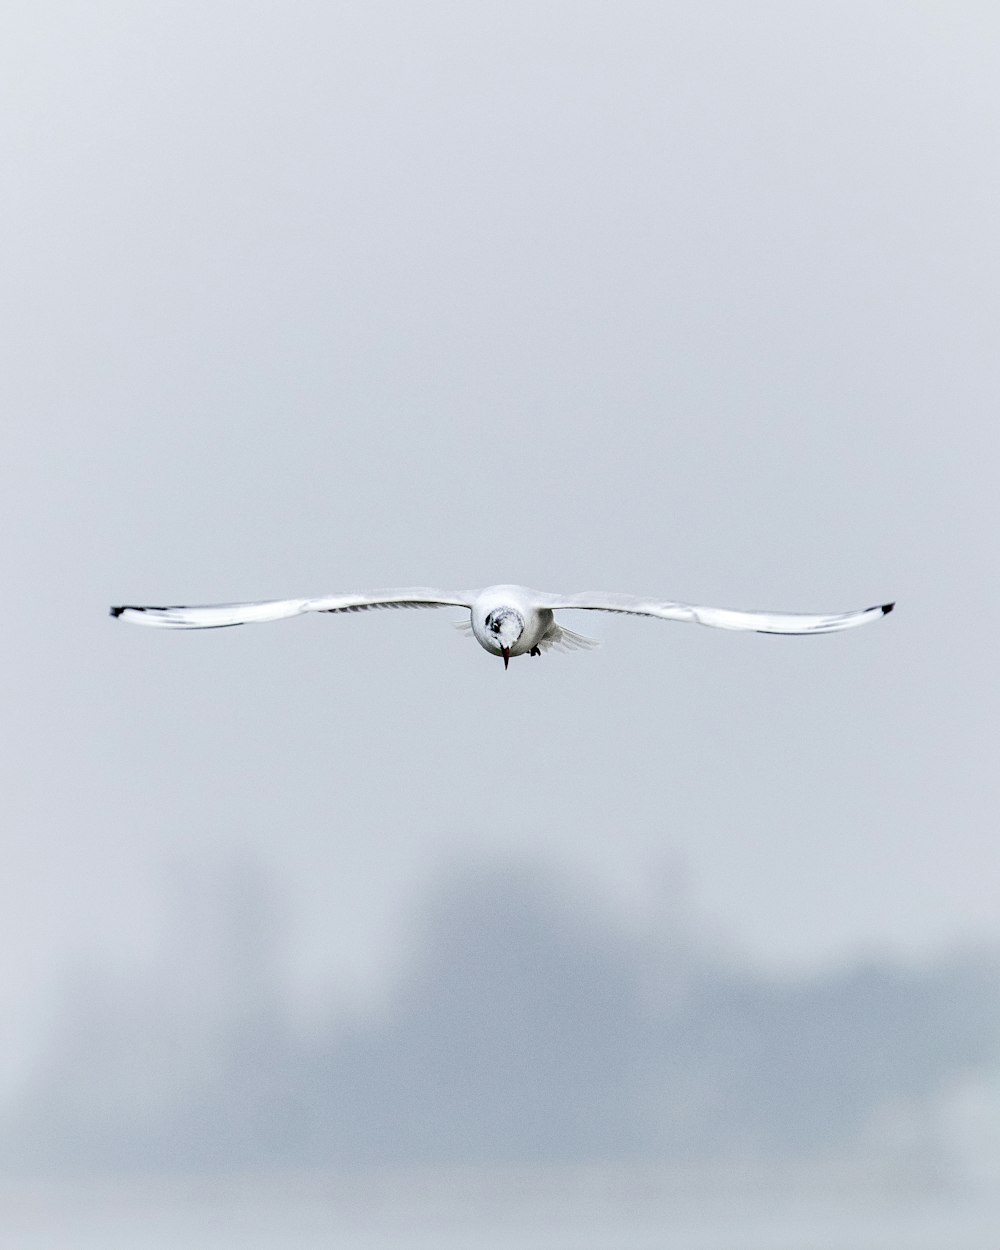 a large white bird flying through a foggy sky